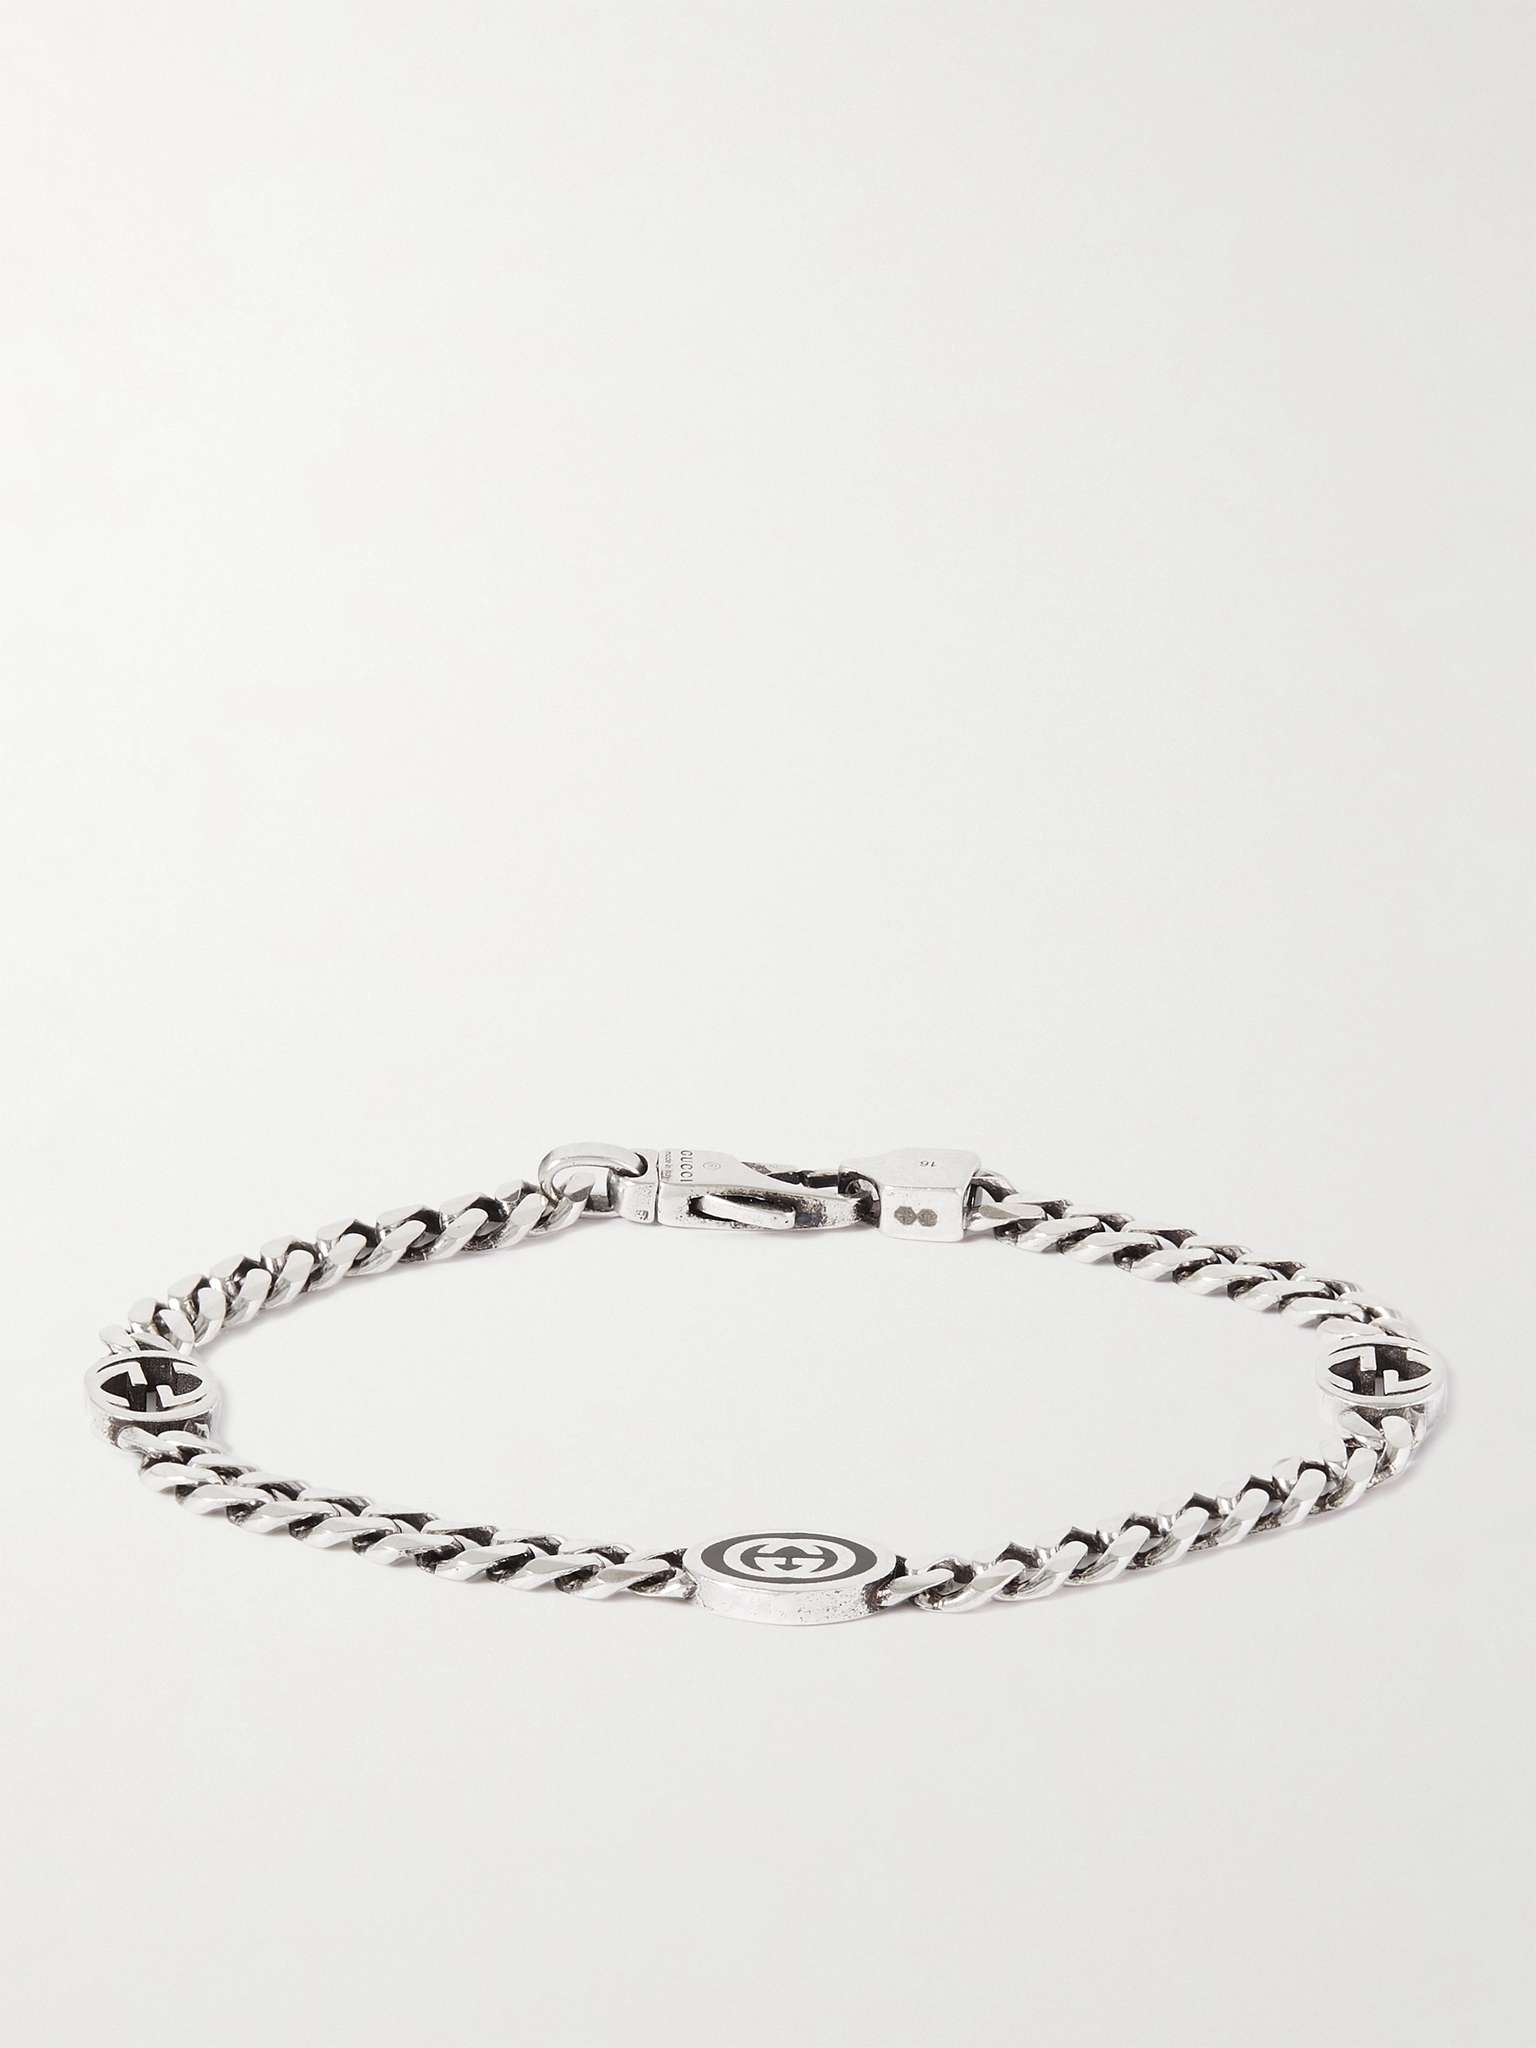 Sterling Silver and Enamel Chain Bracelet - 1